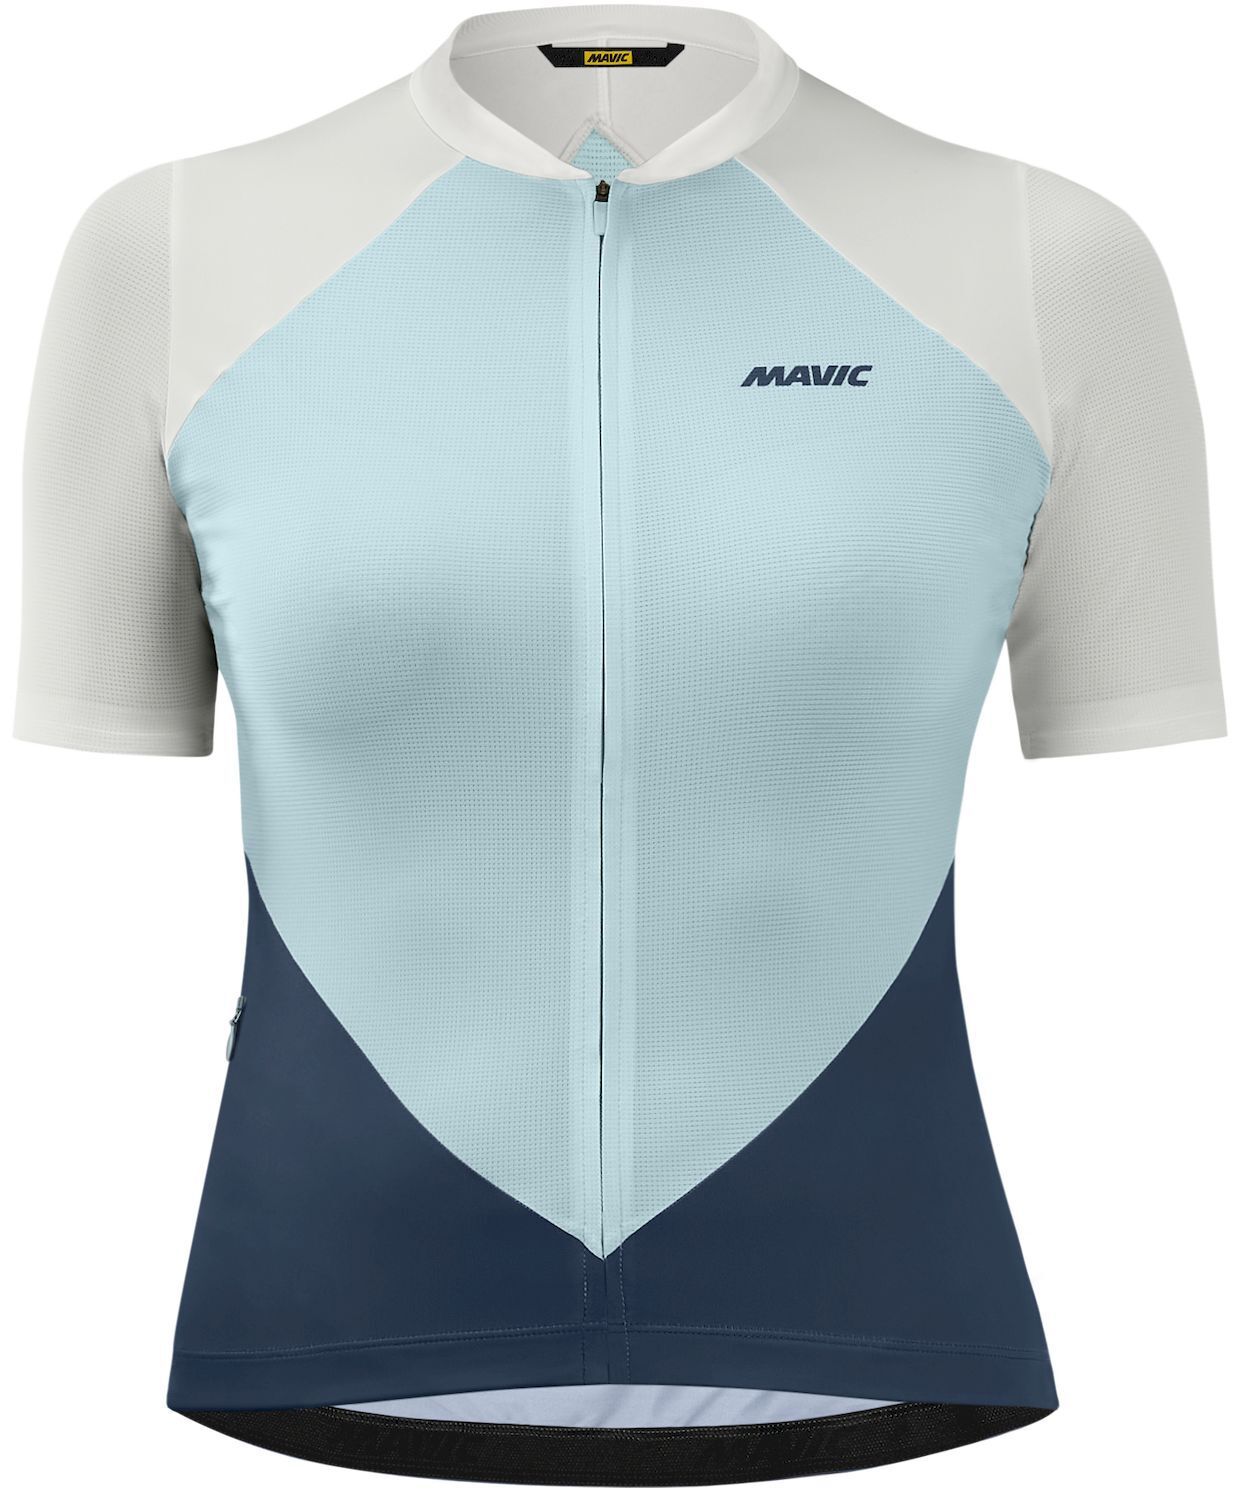 Mavic Sequence Pro - Cycling jersey - Women's